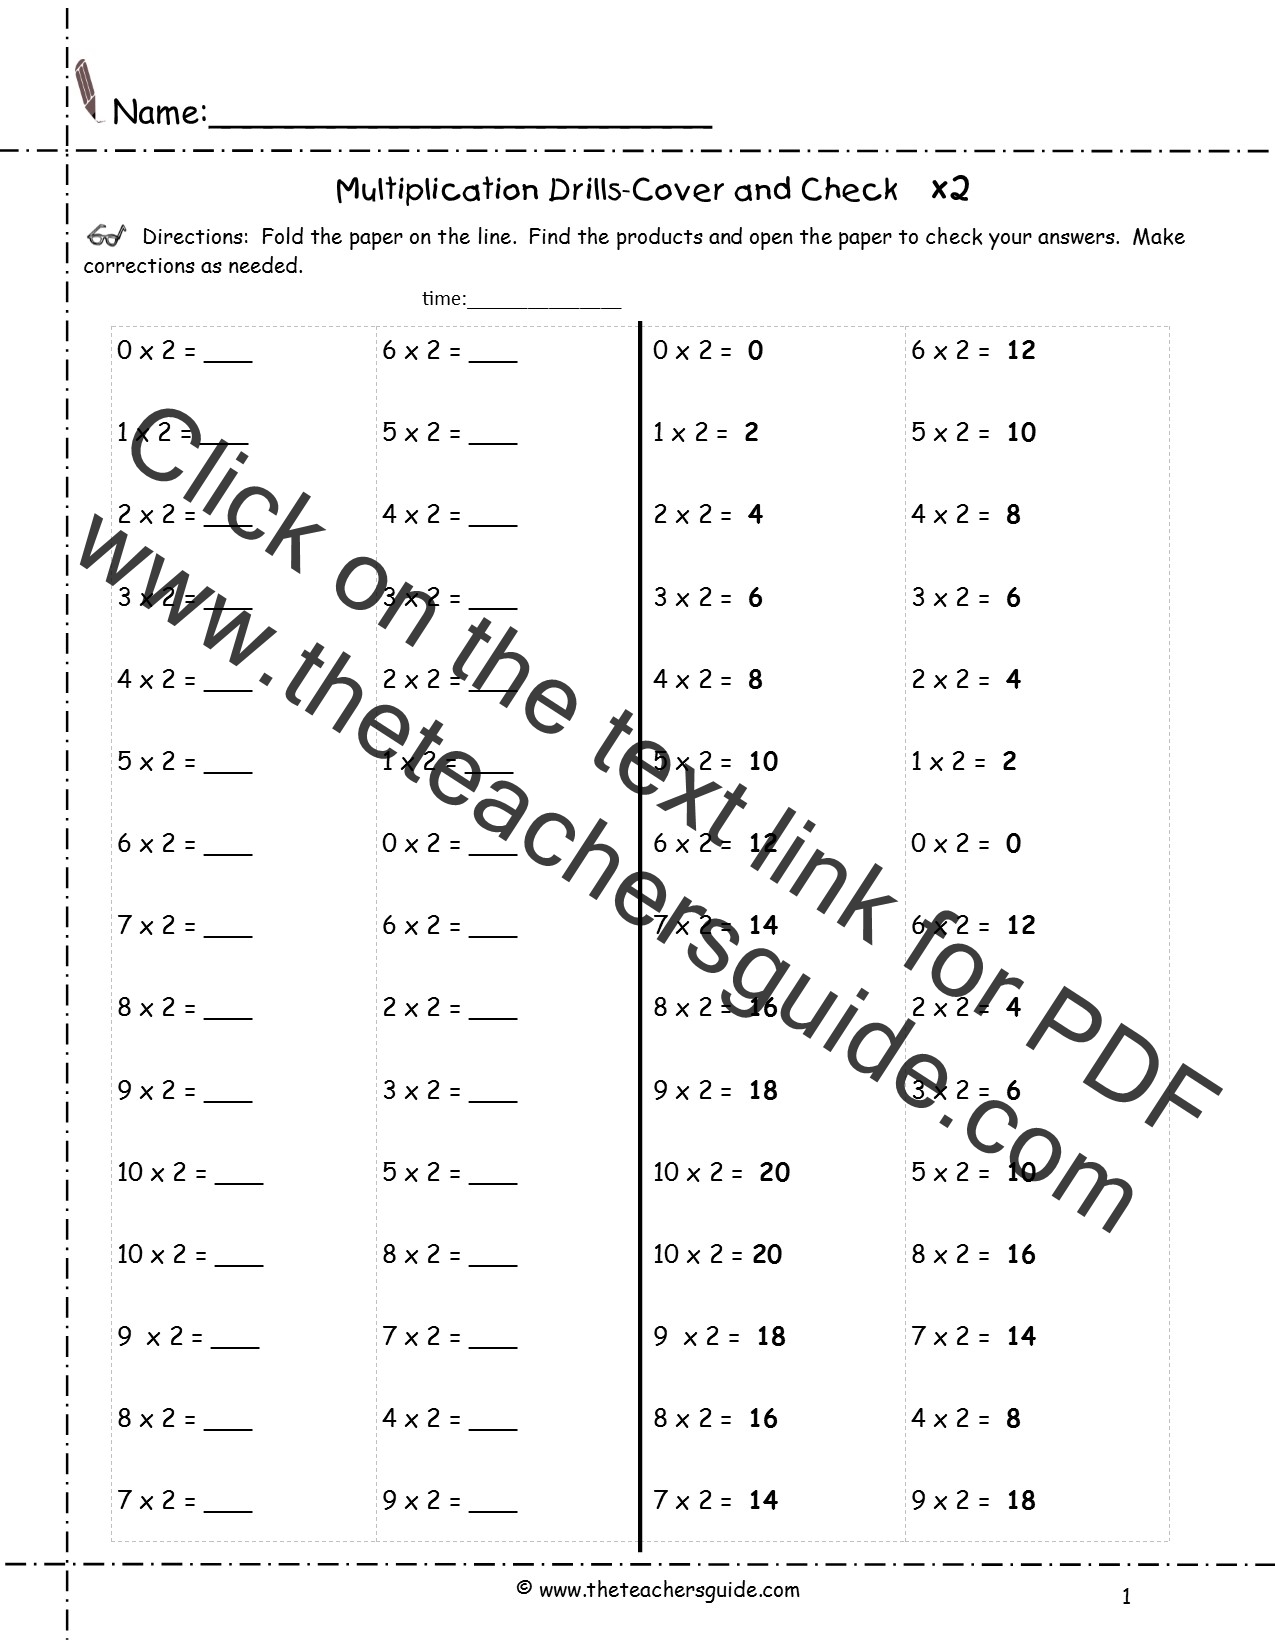 second-grade-multiplication-worksheets-multiplication-learning-math